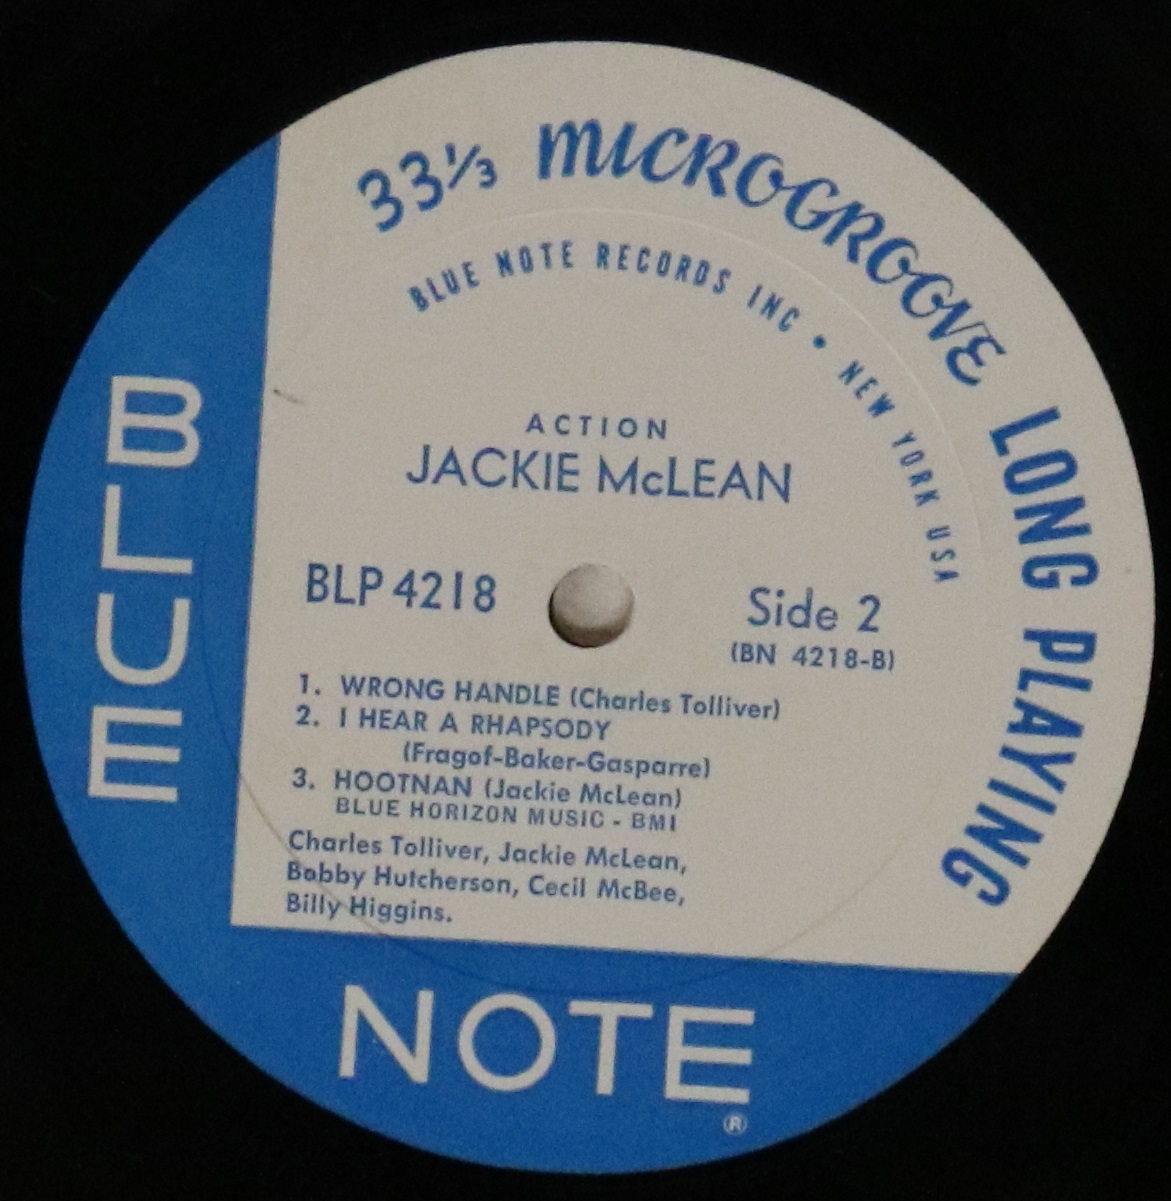 JACKIE MCLEAN - ACTION LP (BLUE NOTE BLP 4218 - ORIGINAL US PRESSING). - Image 4 of 4